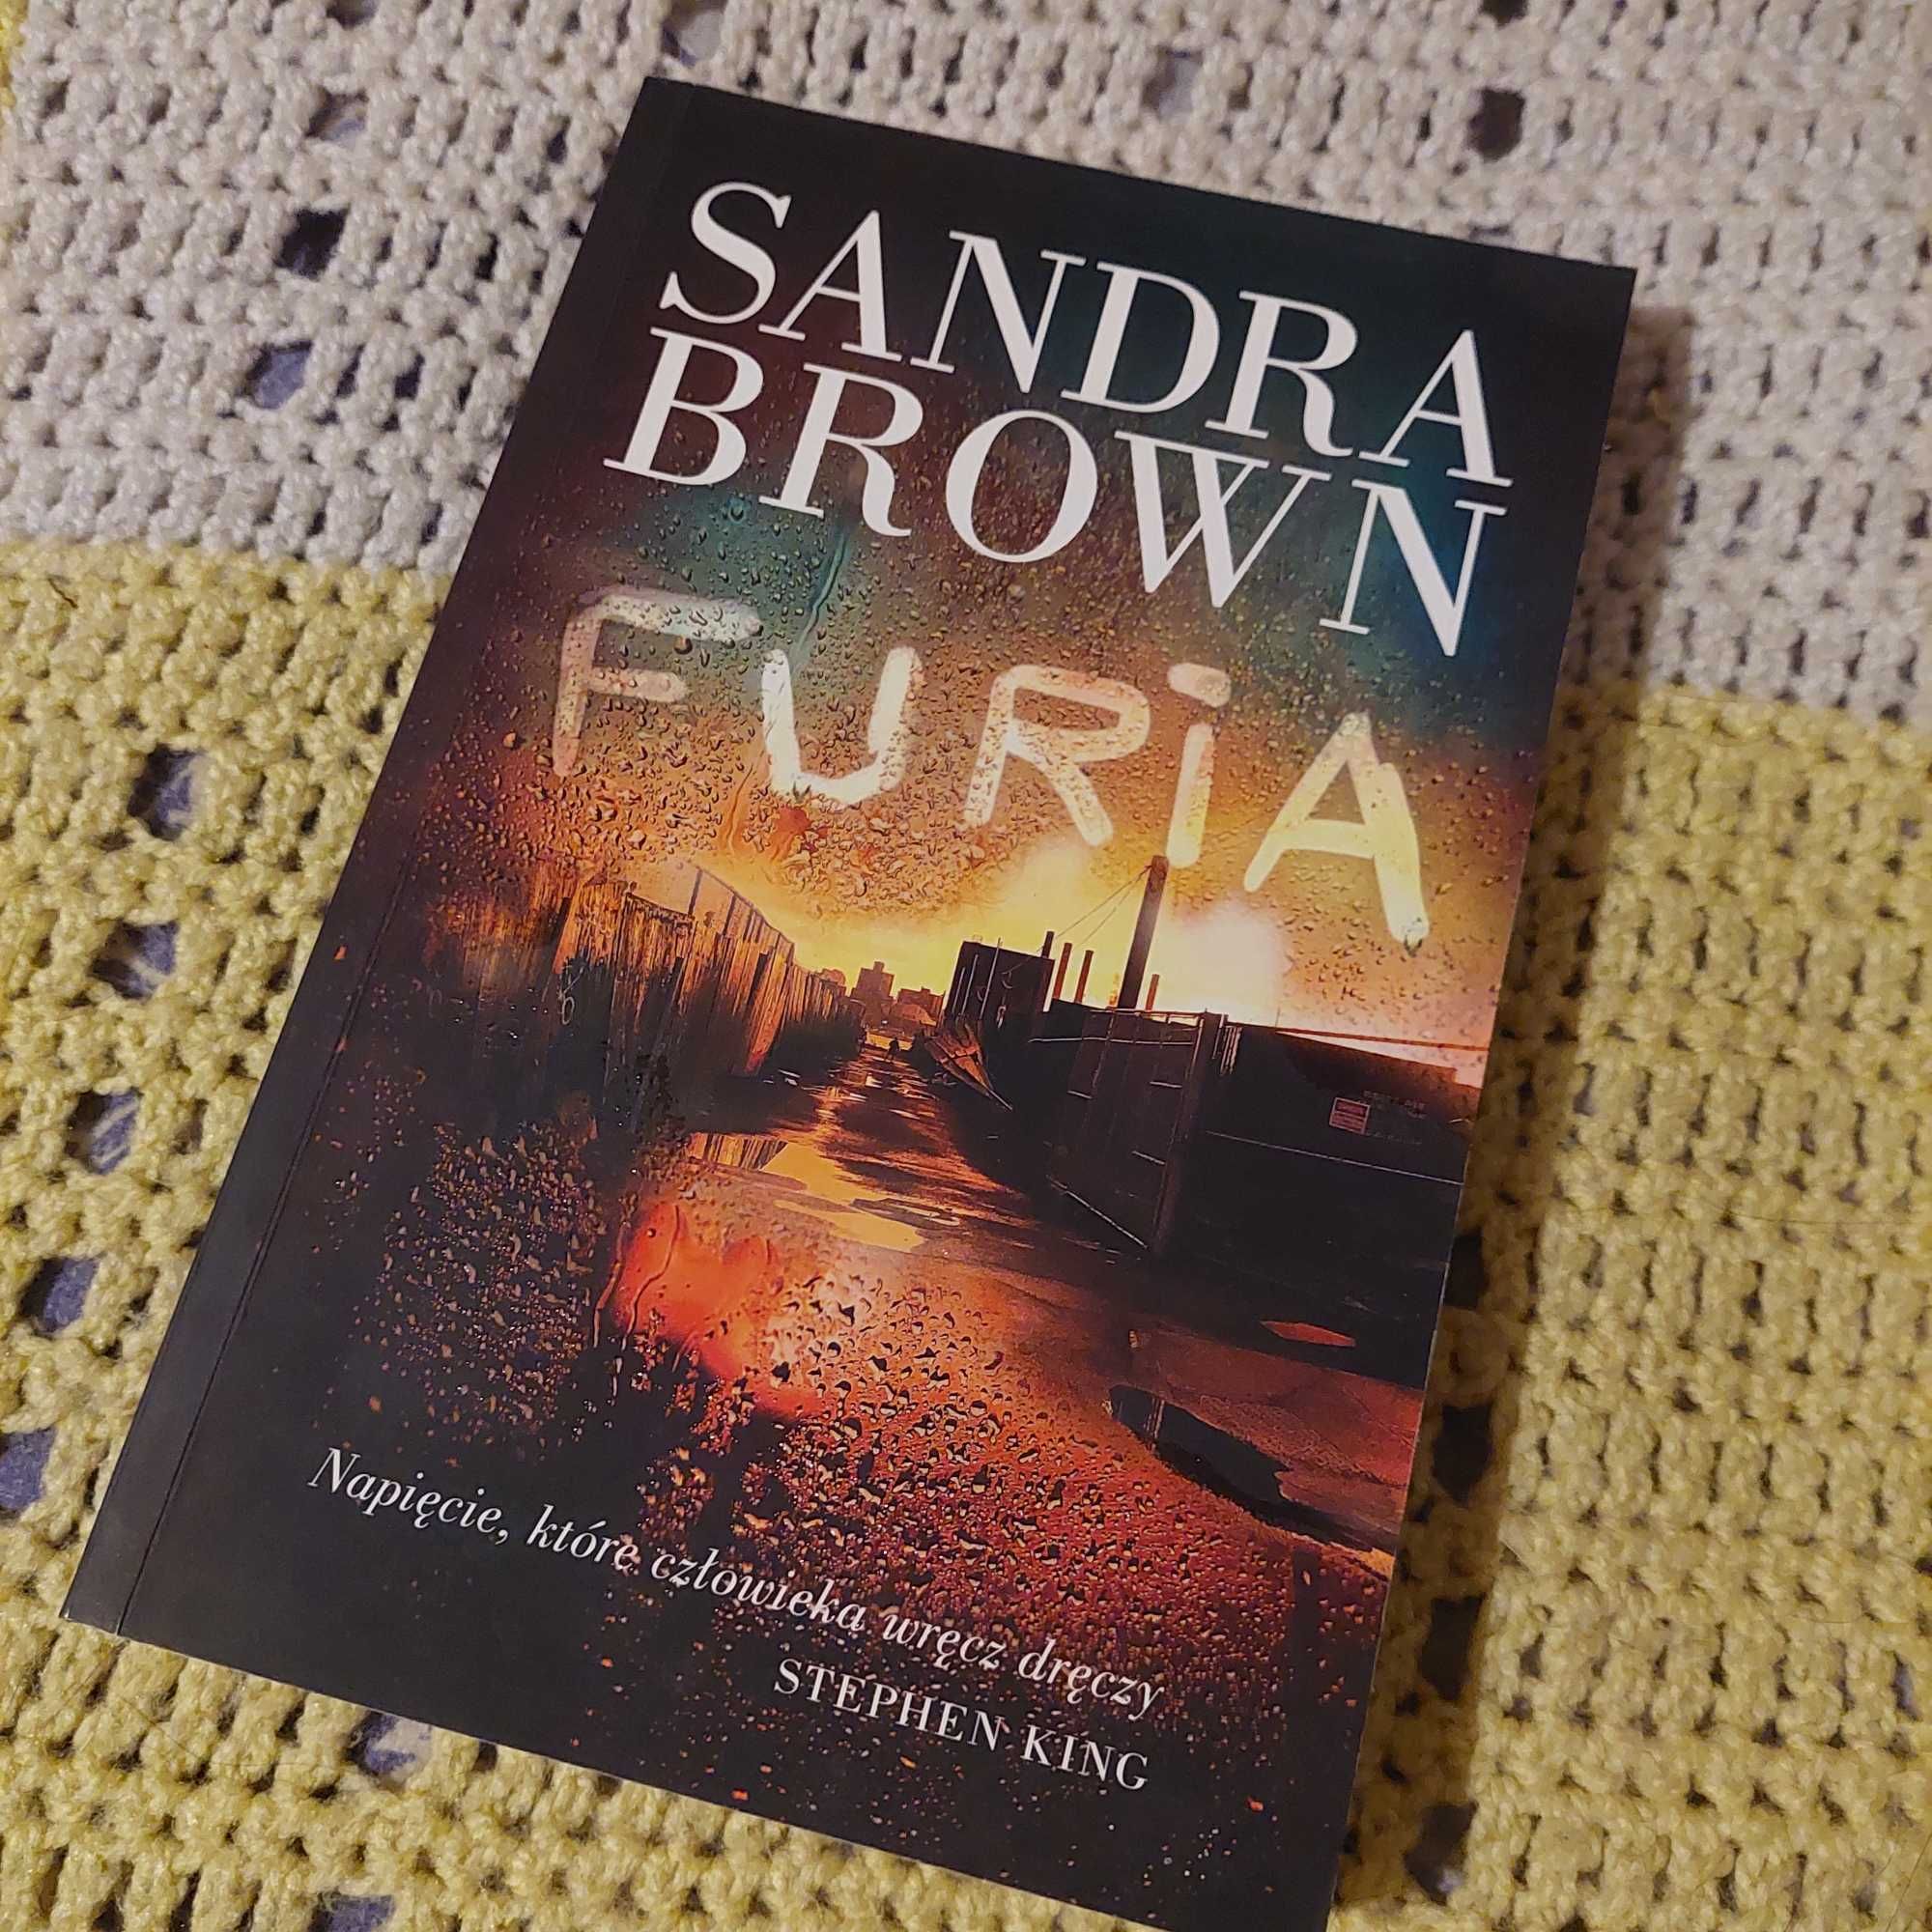 Sandra Brown, "Furia"